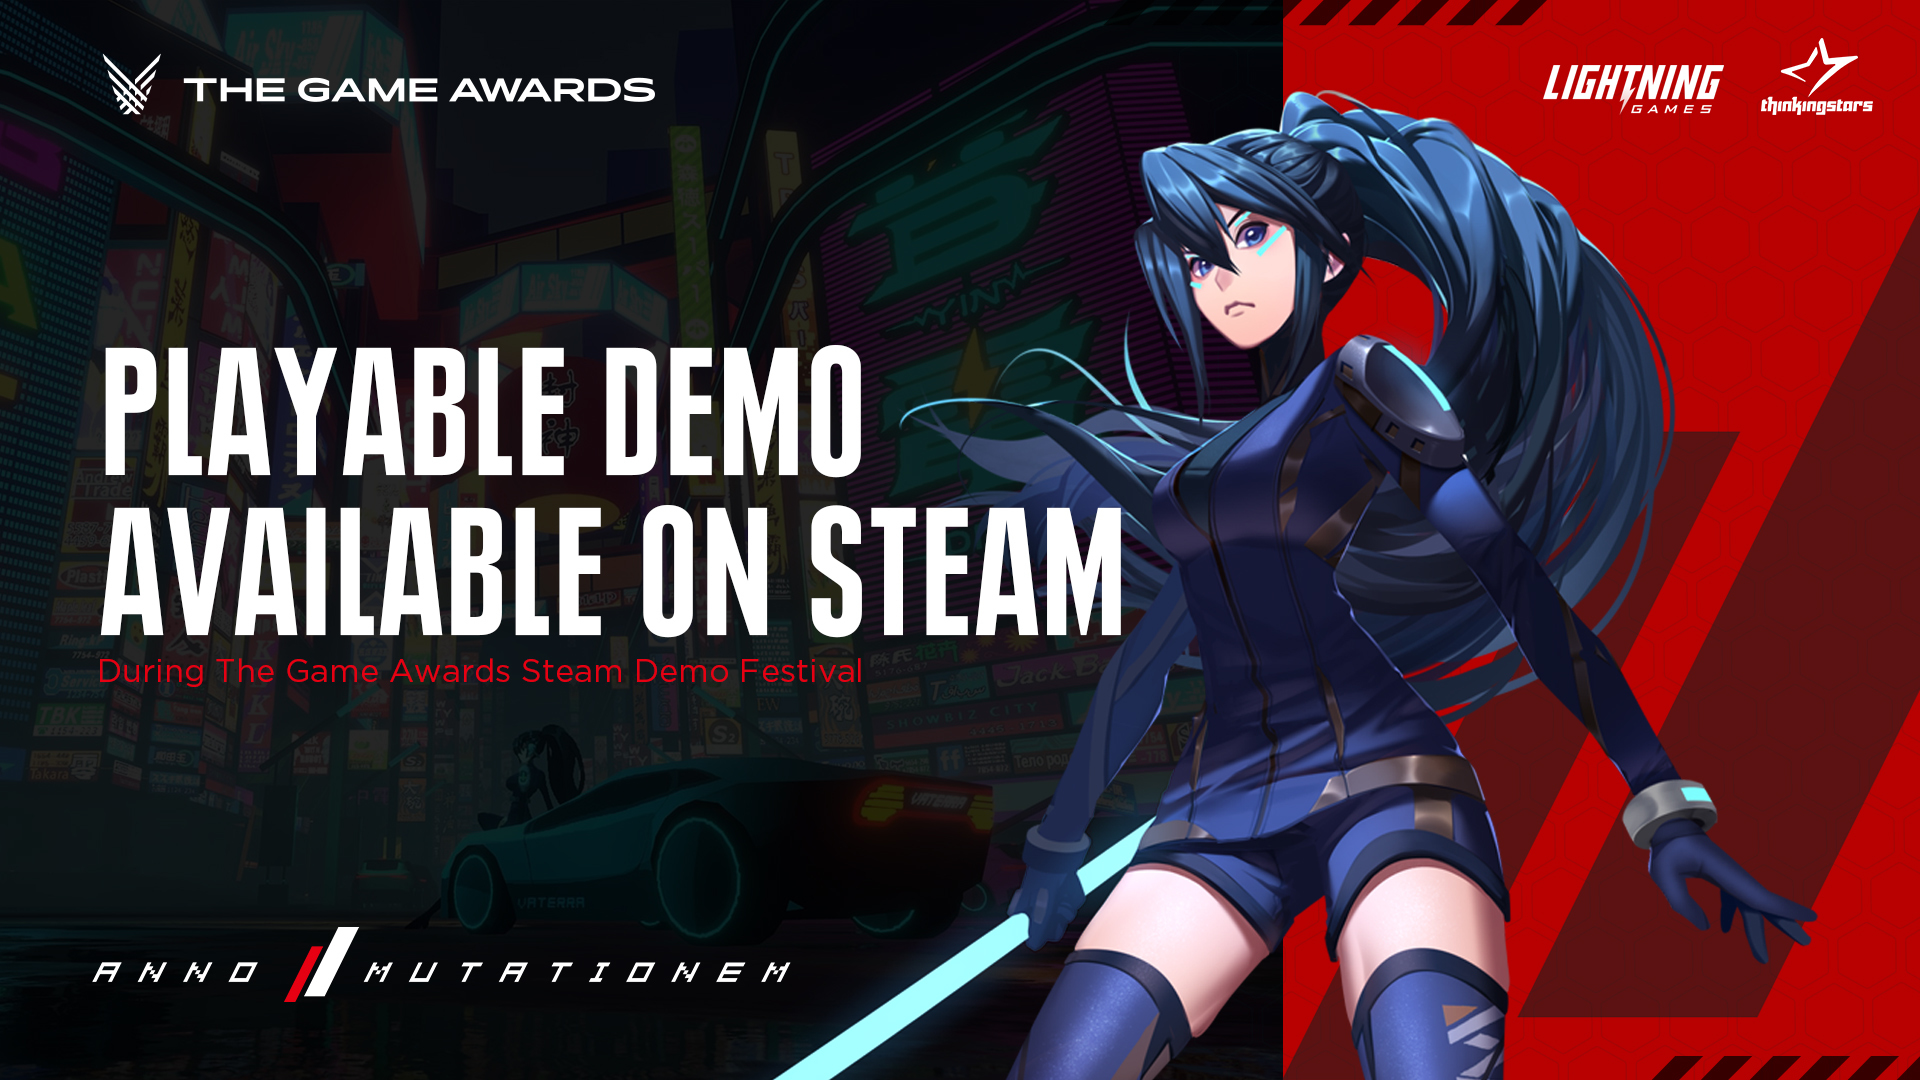 ANNO: Mutationem ฉลองงาน The Game Awards 2020 ด้วยการเปิดให้เล่นเกมเวอร์ชั่น Demo แบบจำกัดเวลาแล้วตอนนี้!